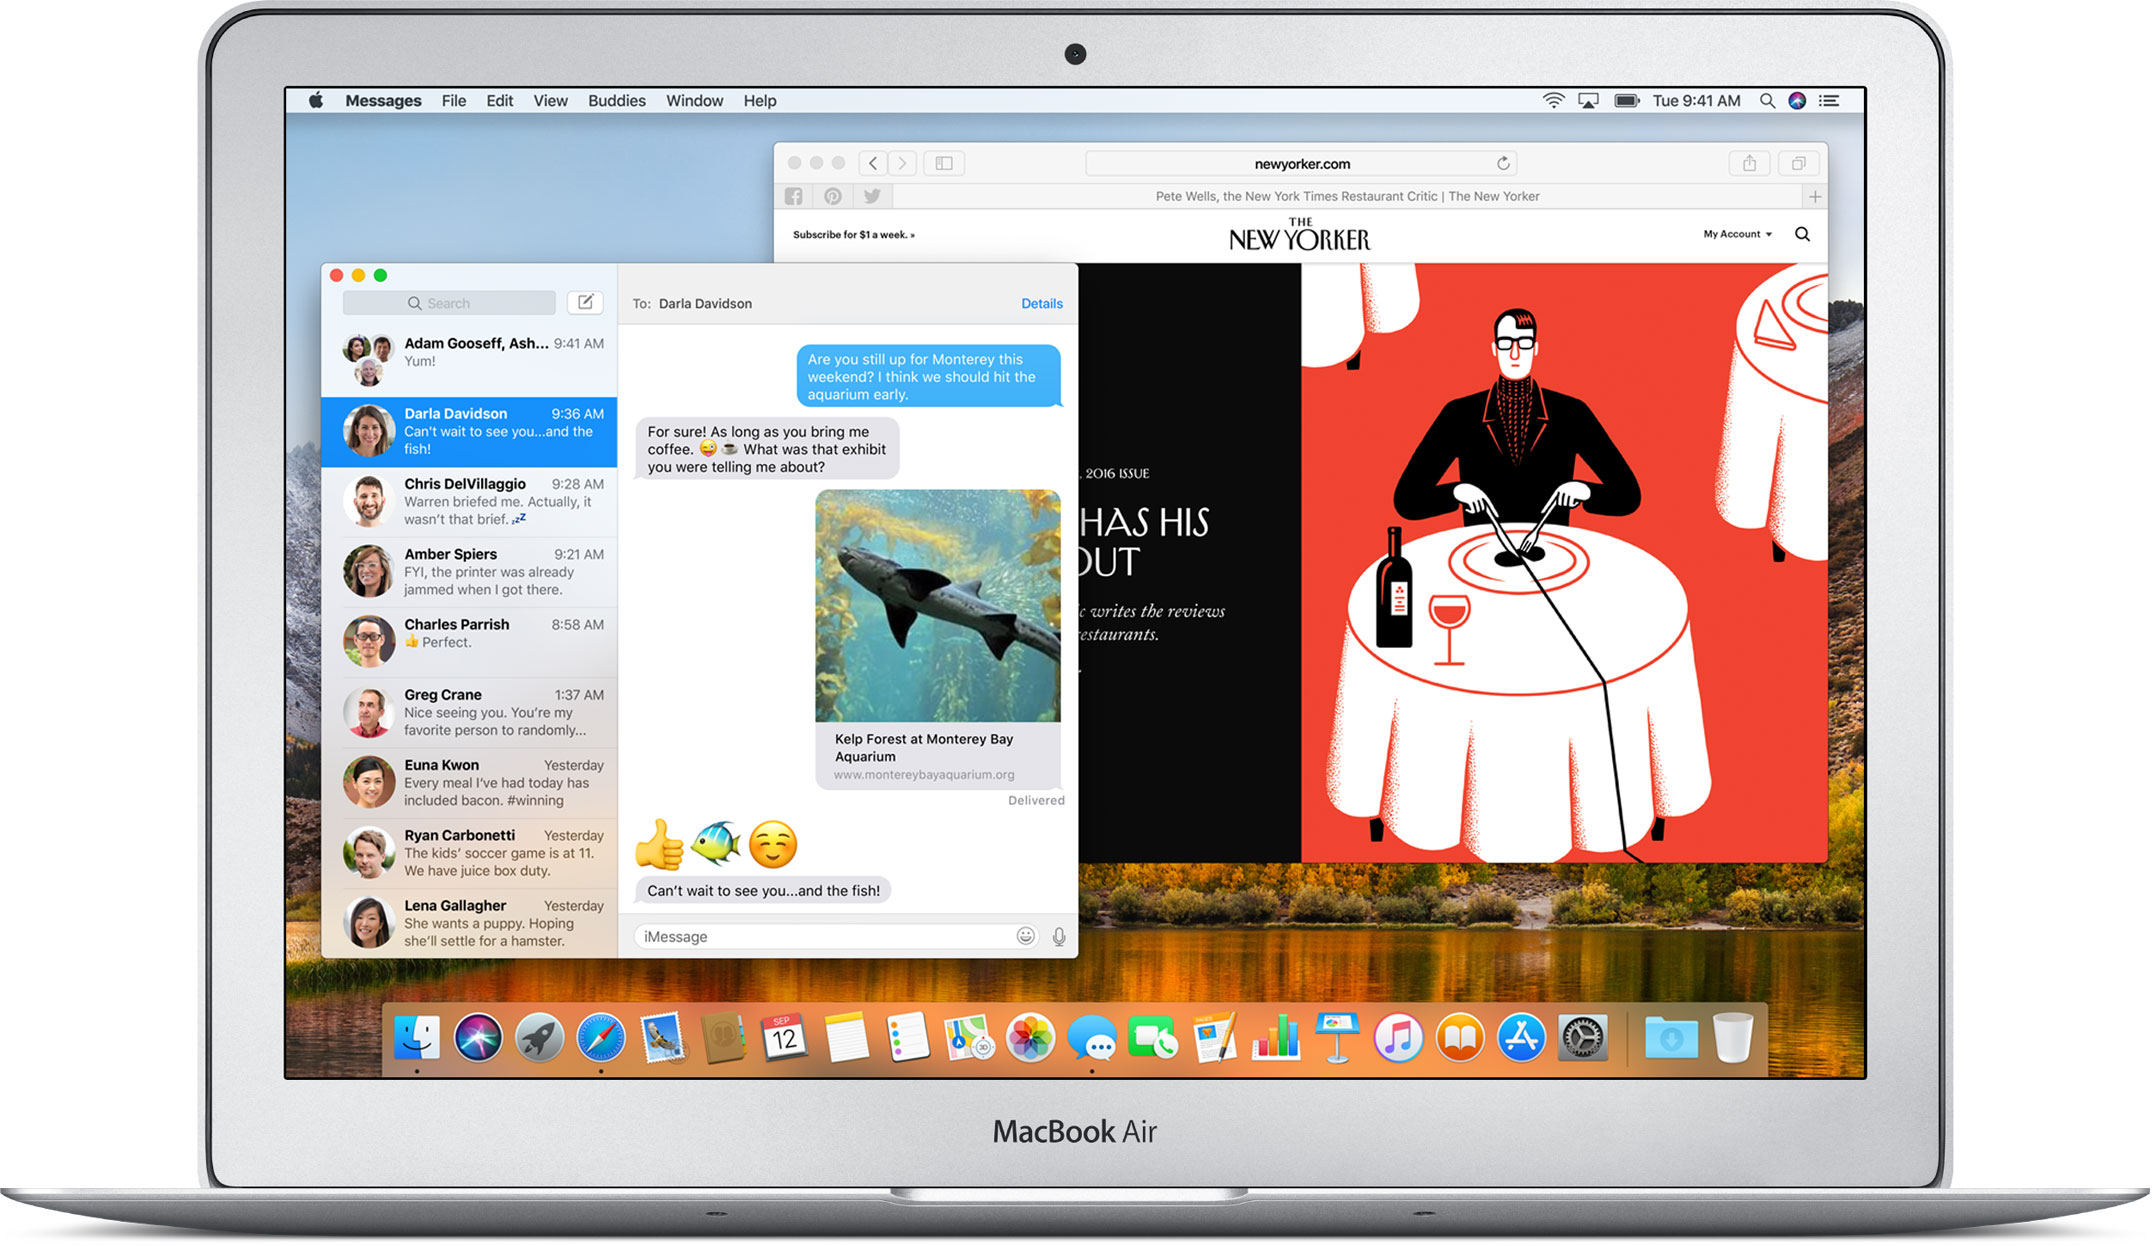 Nautige: MacBook Airi algmudel on ülipakkumisel! [atualizado 2x]